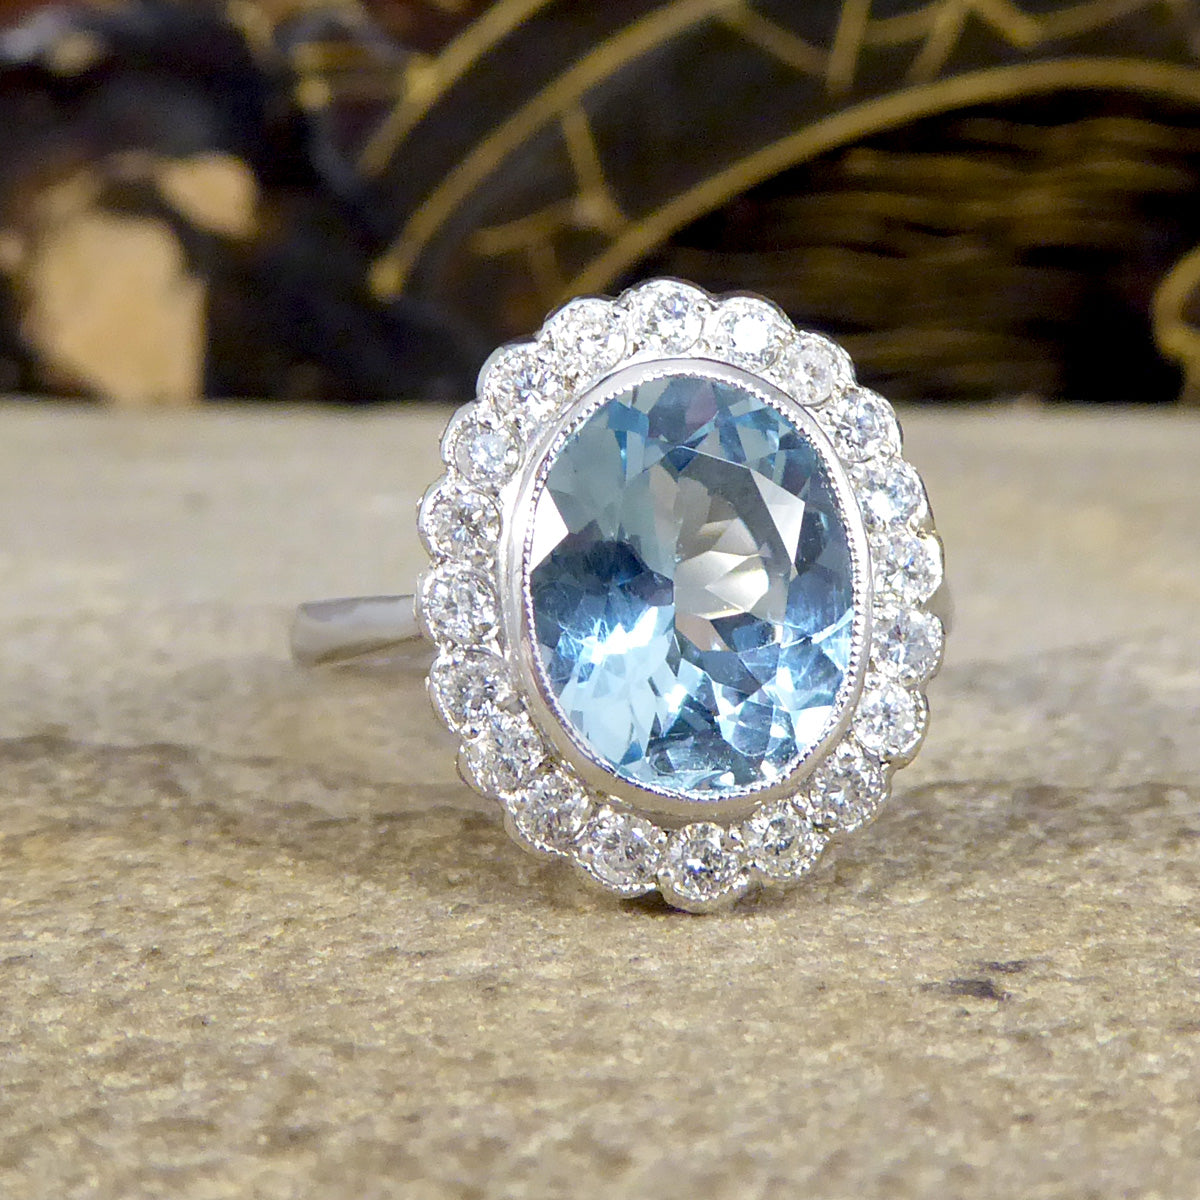 Edwardian Inspired 2.25ct Aquamarine and Diamond Cluster Ring in Platinum